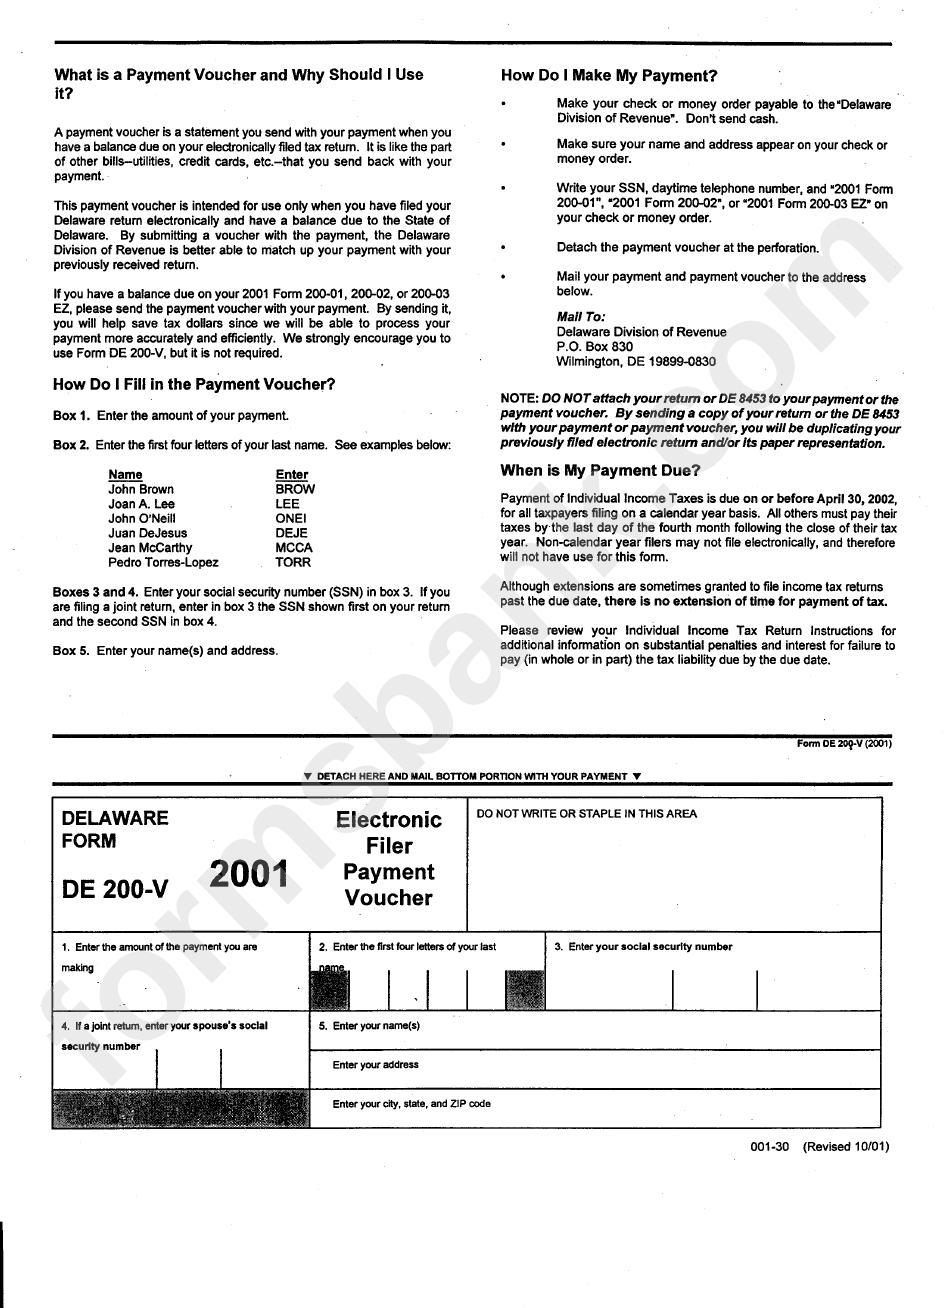 Form De 200-V - Electronic Filer Payment Voucher 2001 - Delaware Division Of Revenue